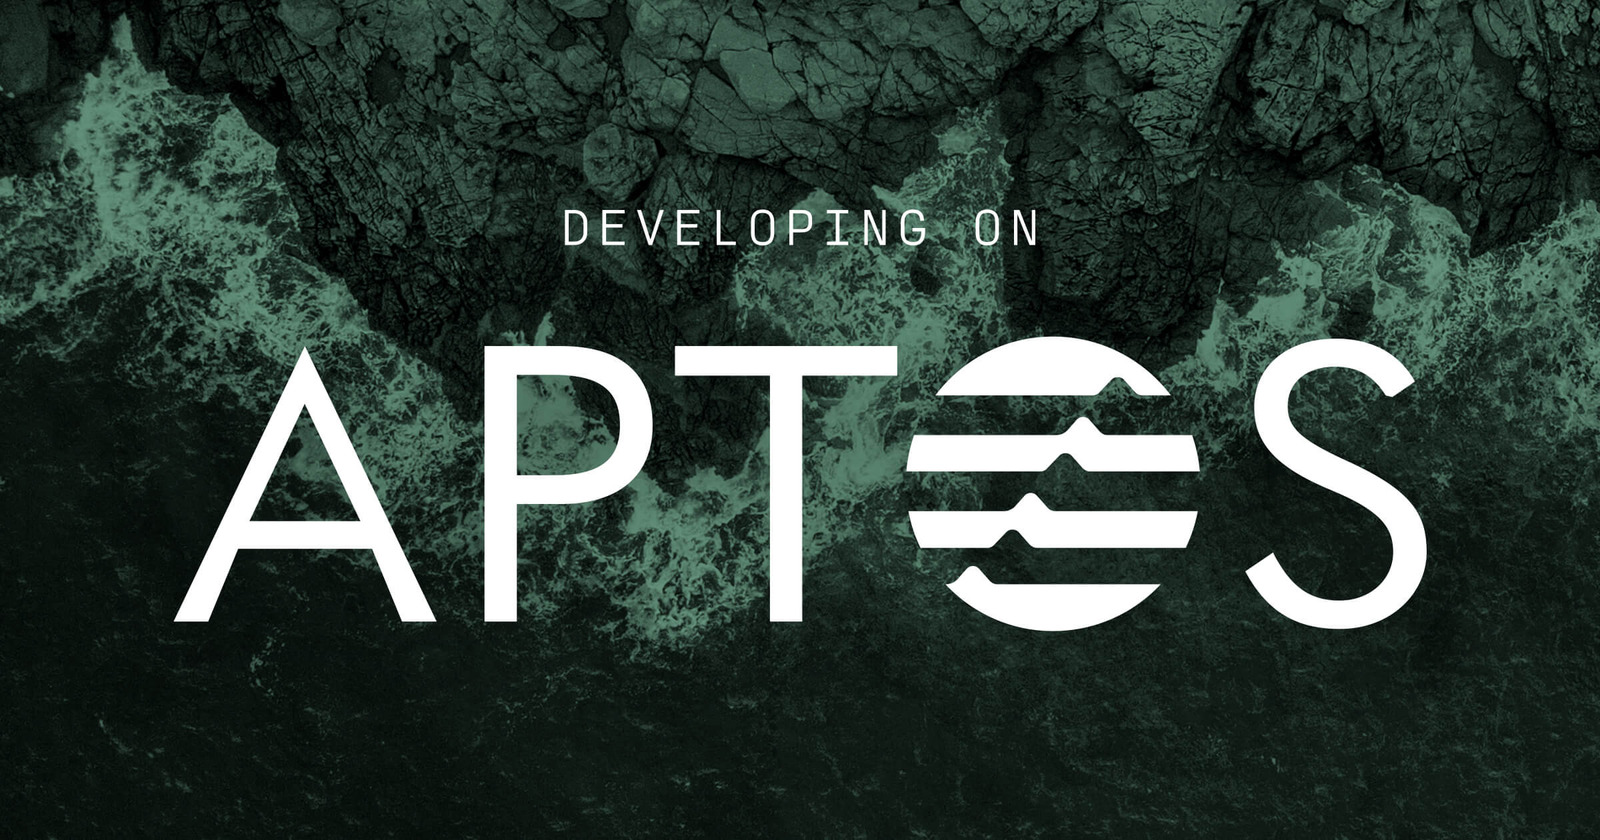 Aptos Labs launches its blockchain